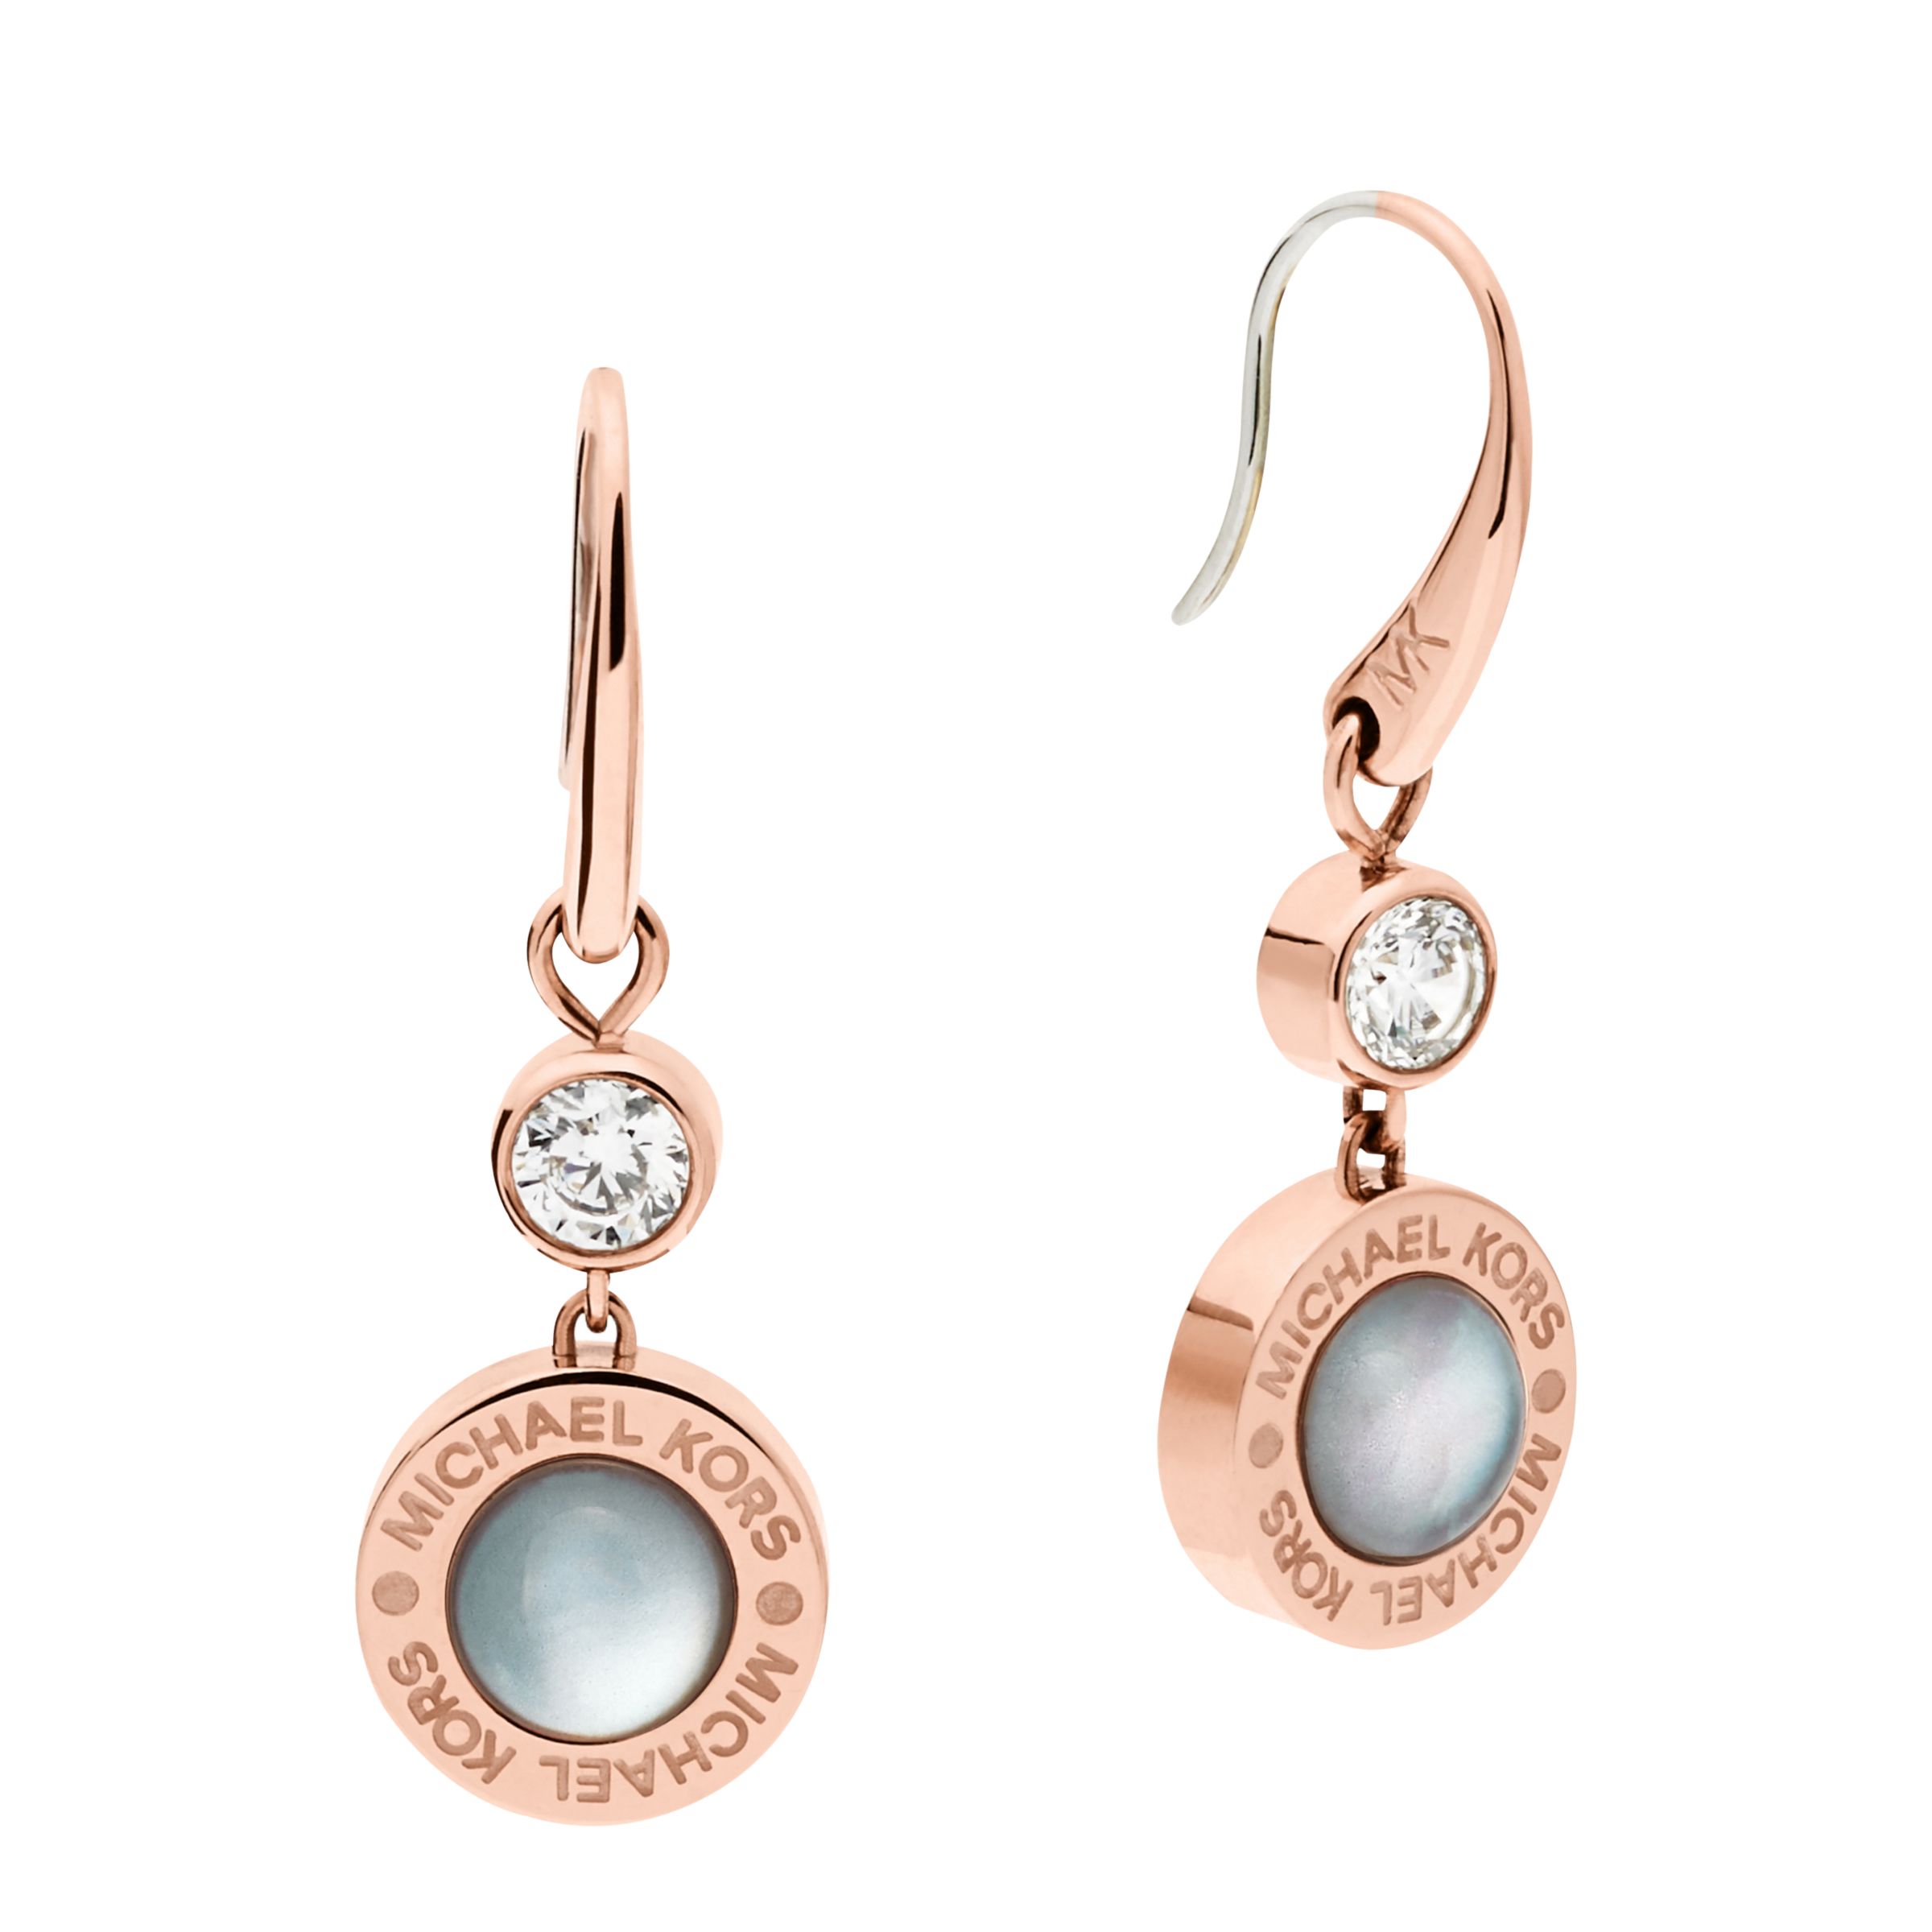 Michael Kors Mother of Pearl Logo Drop Earrings, Rose Gold/Grey